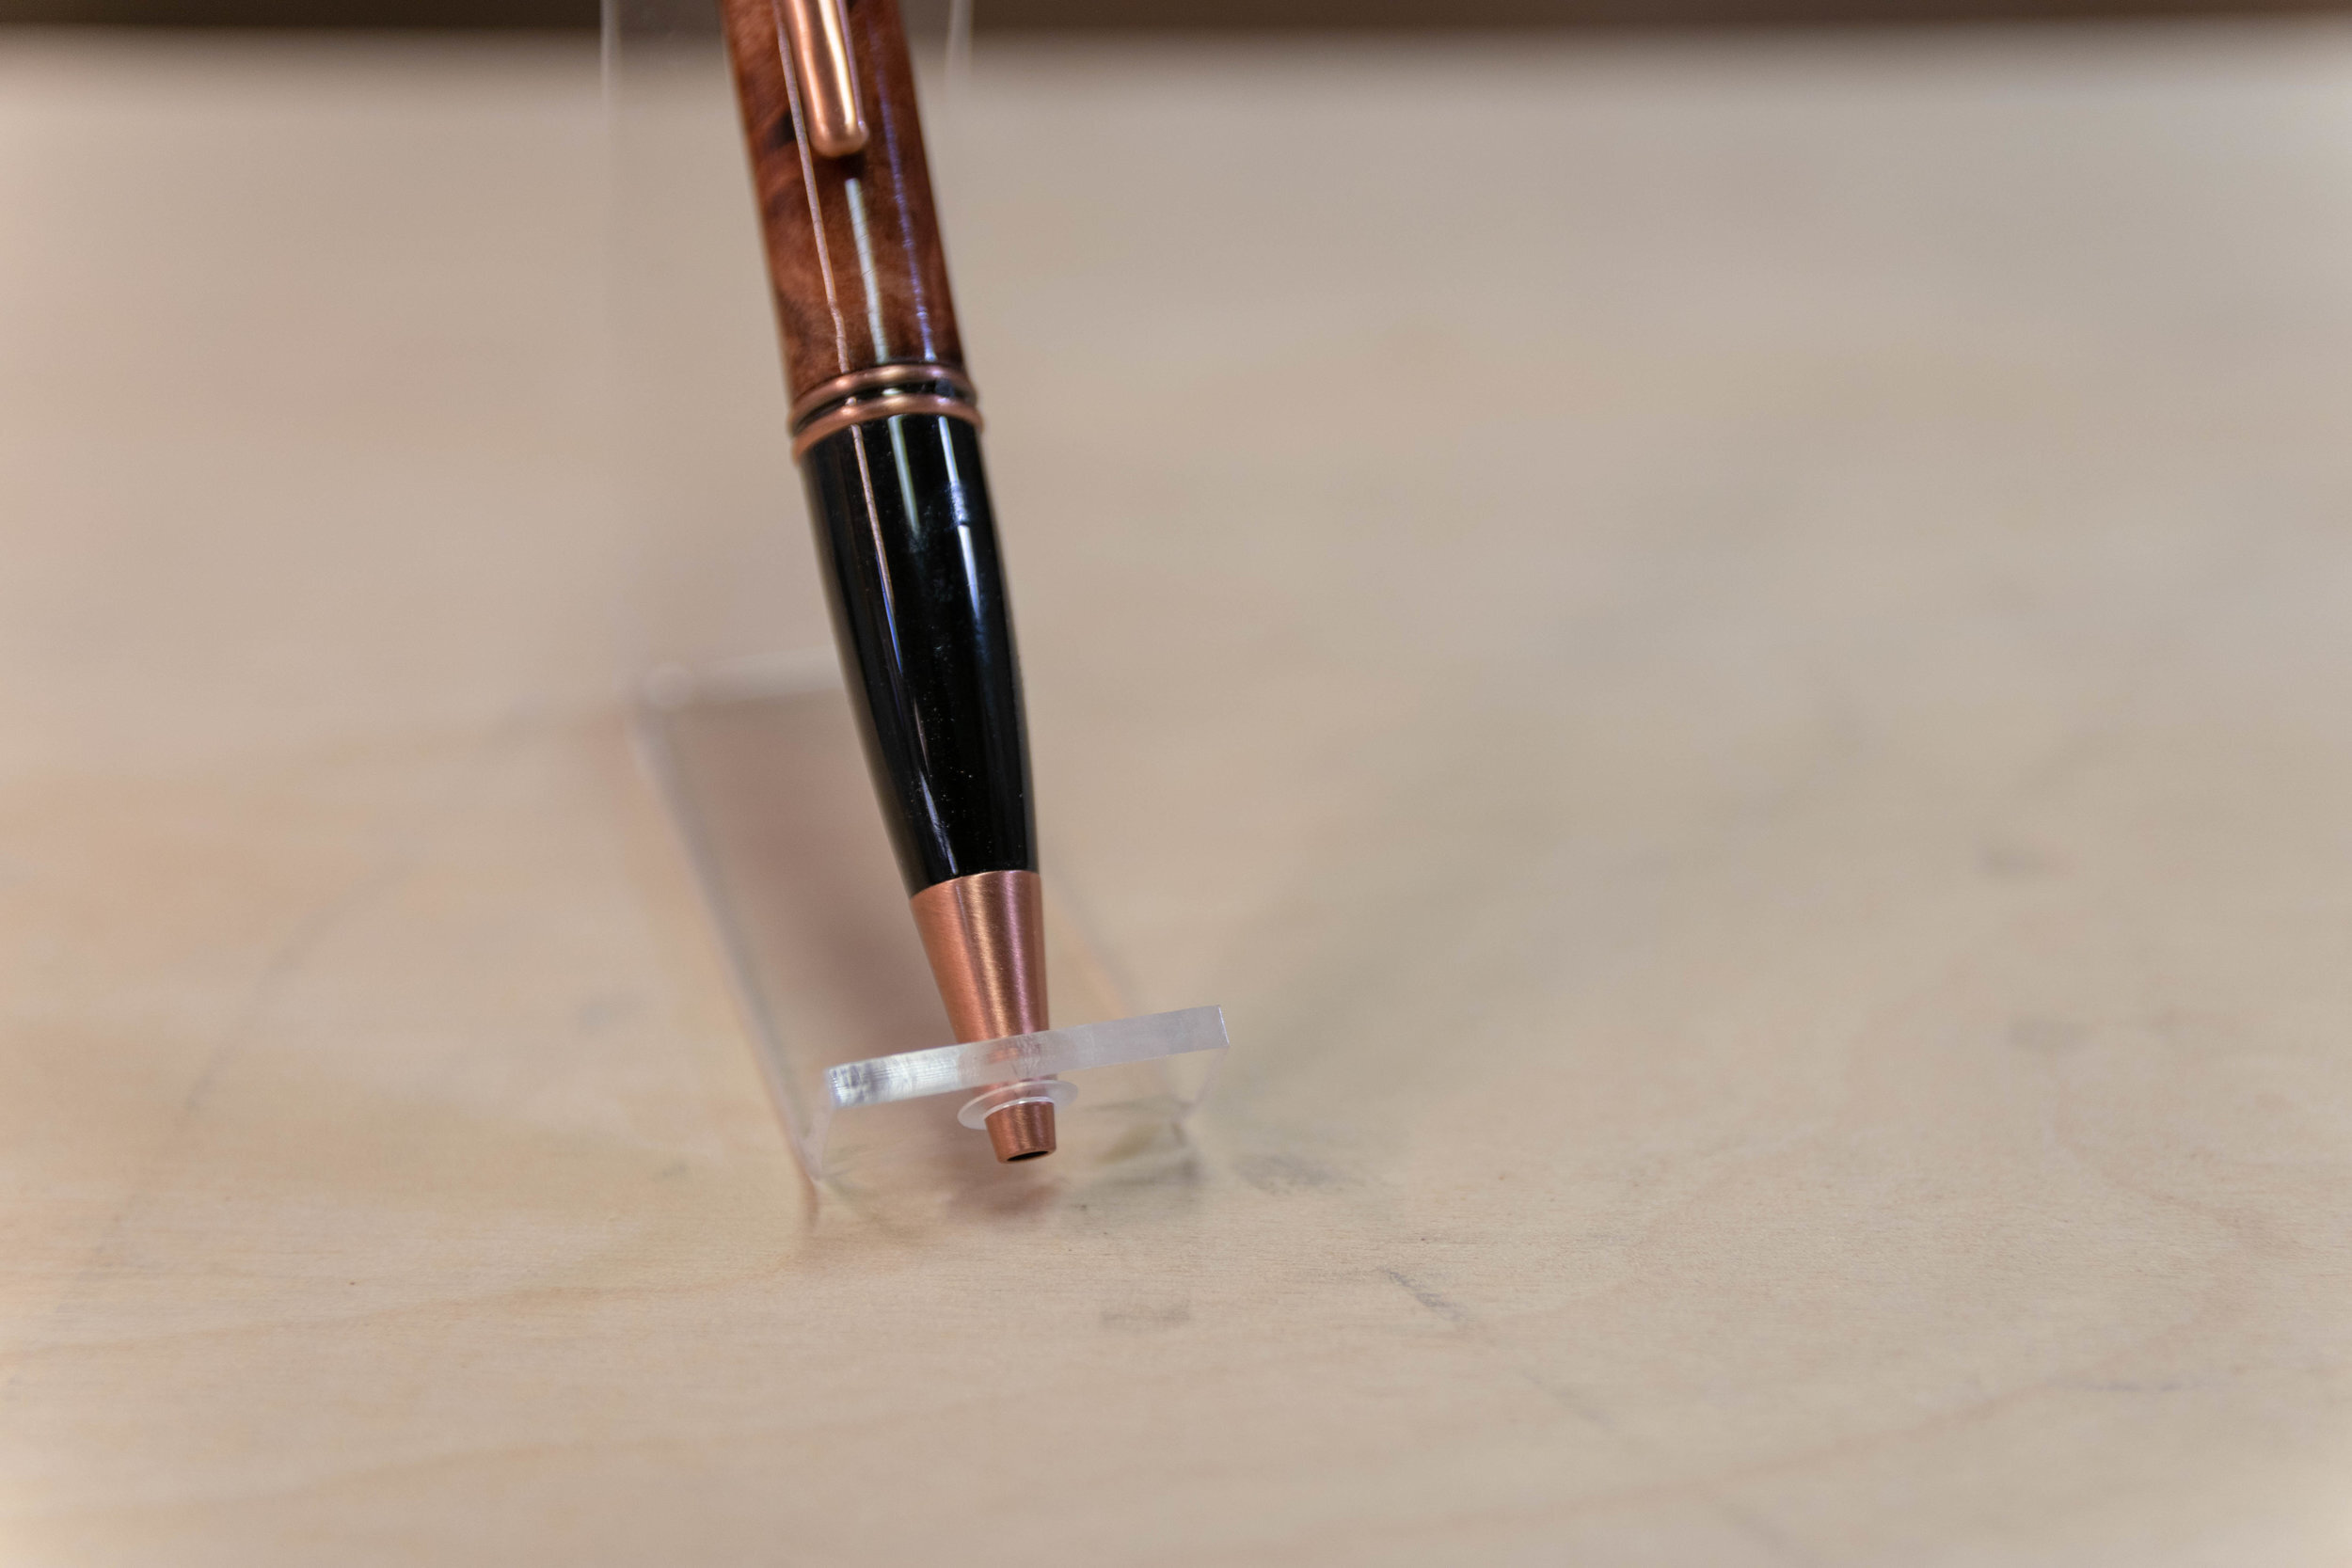 Micro-Mesh Pen Sanding Kit - Power Lathe Accessories 